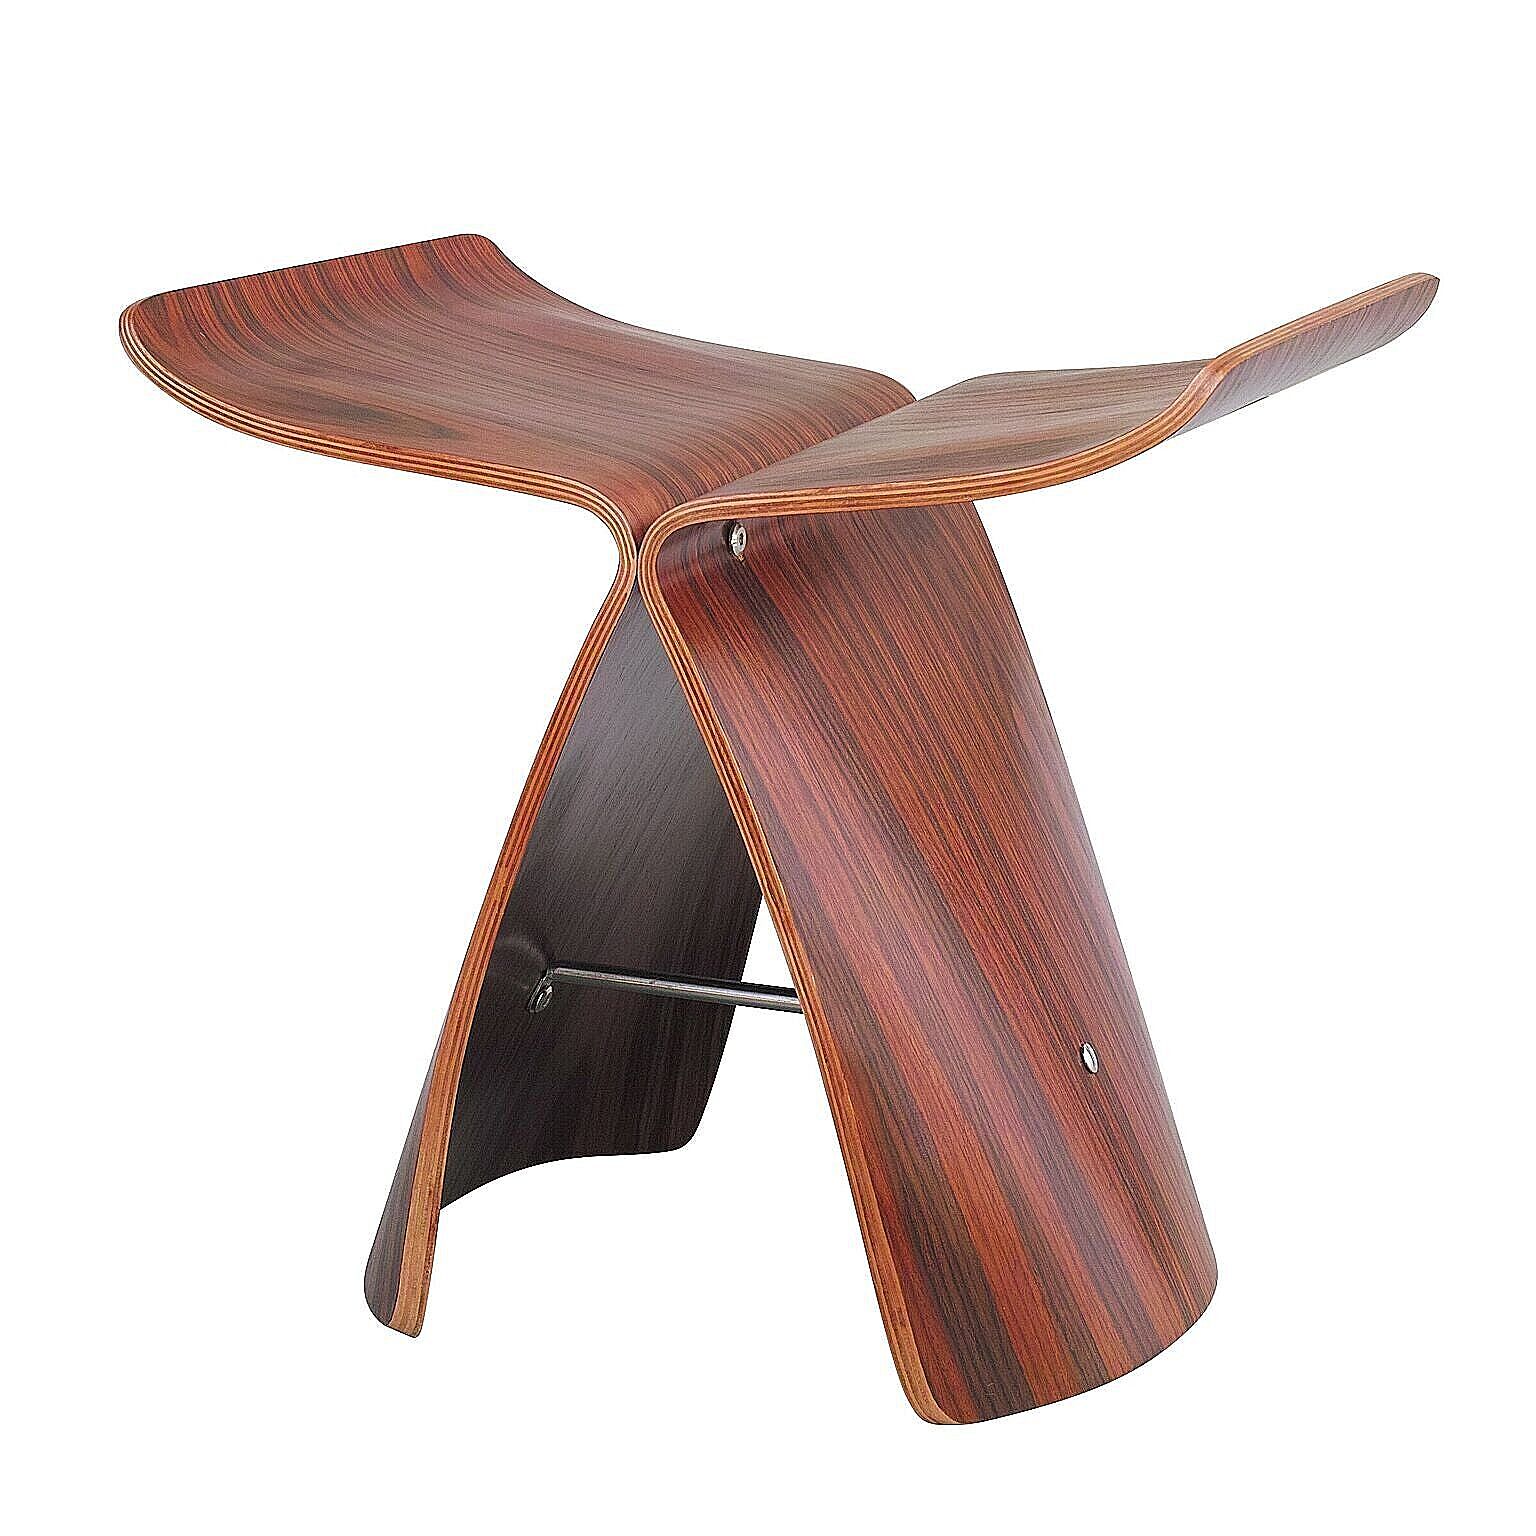 Will-Limited. ウイングスツール ローズウッド クッション付き ブラウン 木製 椅子 オットマン